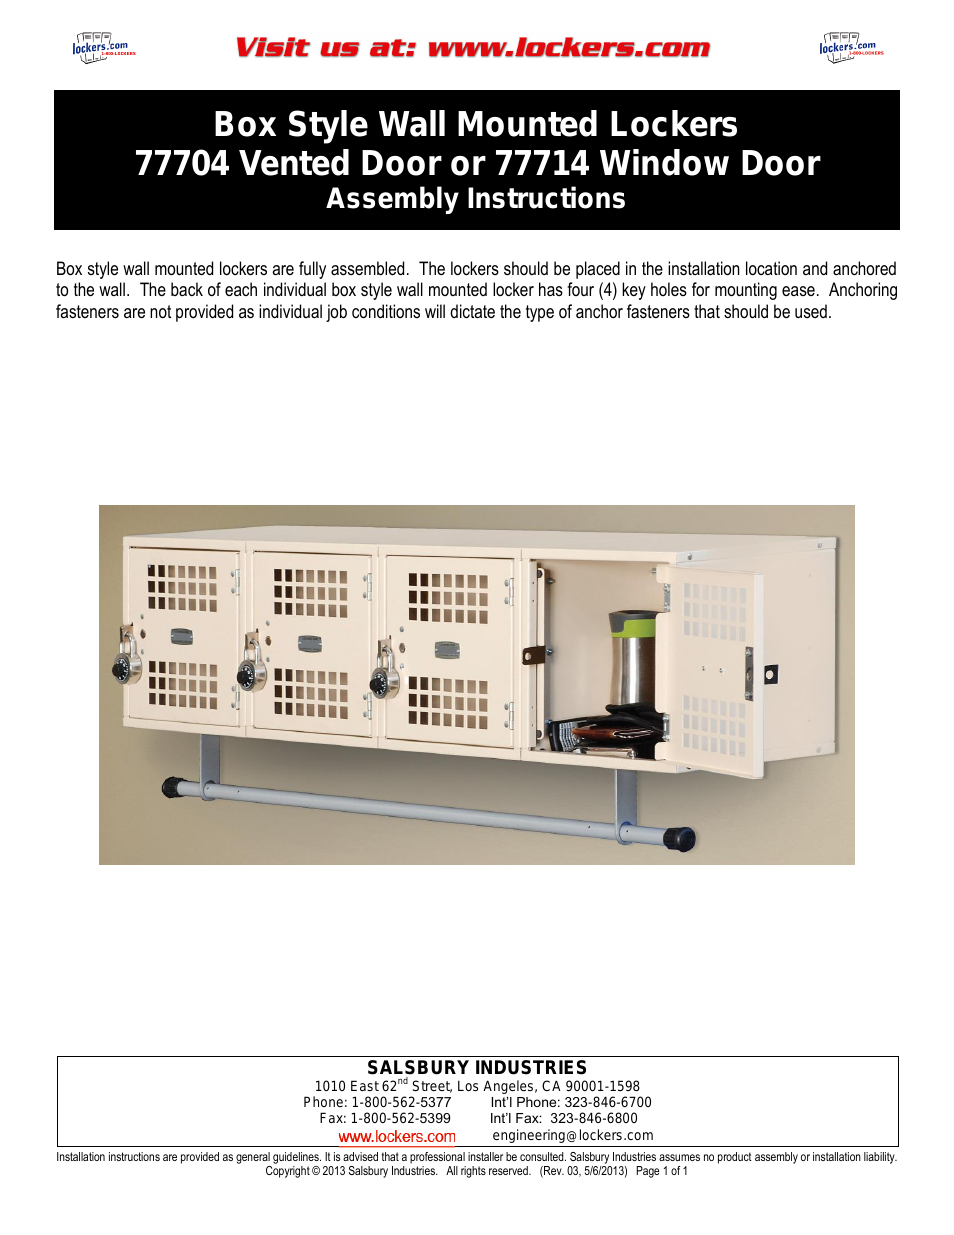 77704 Vented Door or 77714 Window Door Series Box Style Wall Mounted Lockers